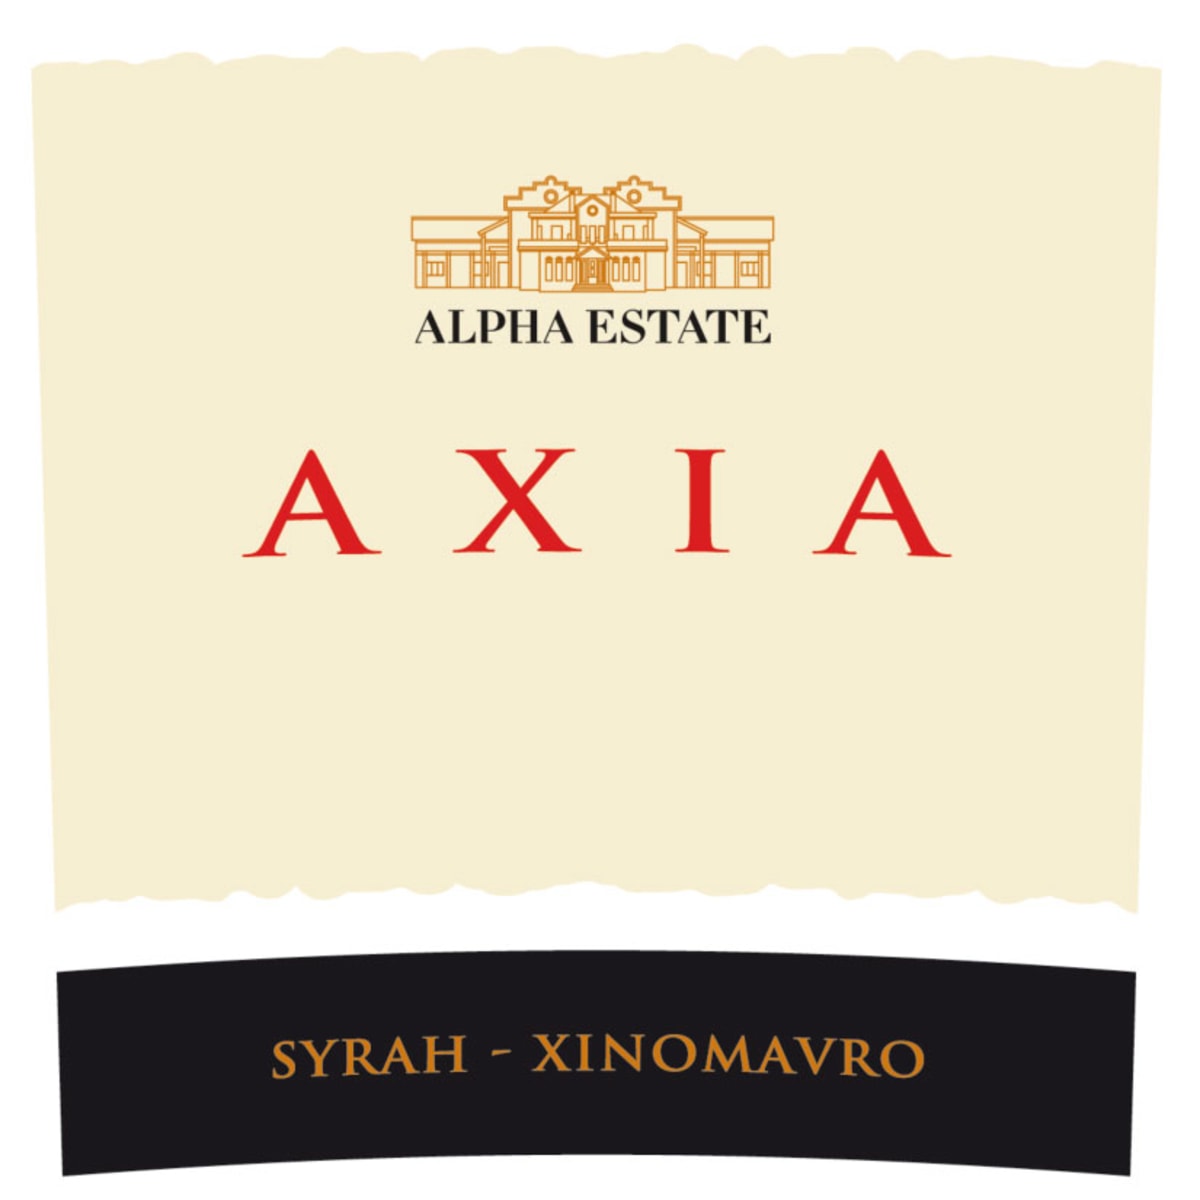 Alpha Estate Axia Syrah-Xinomavro 2011 Front Label